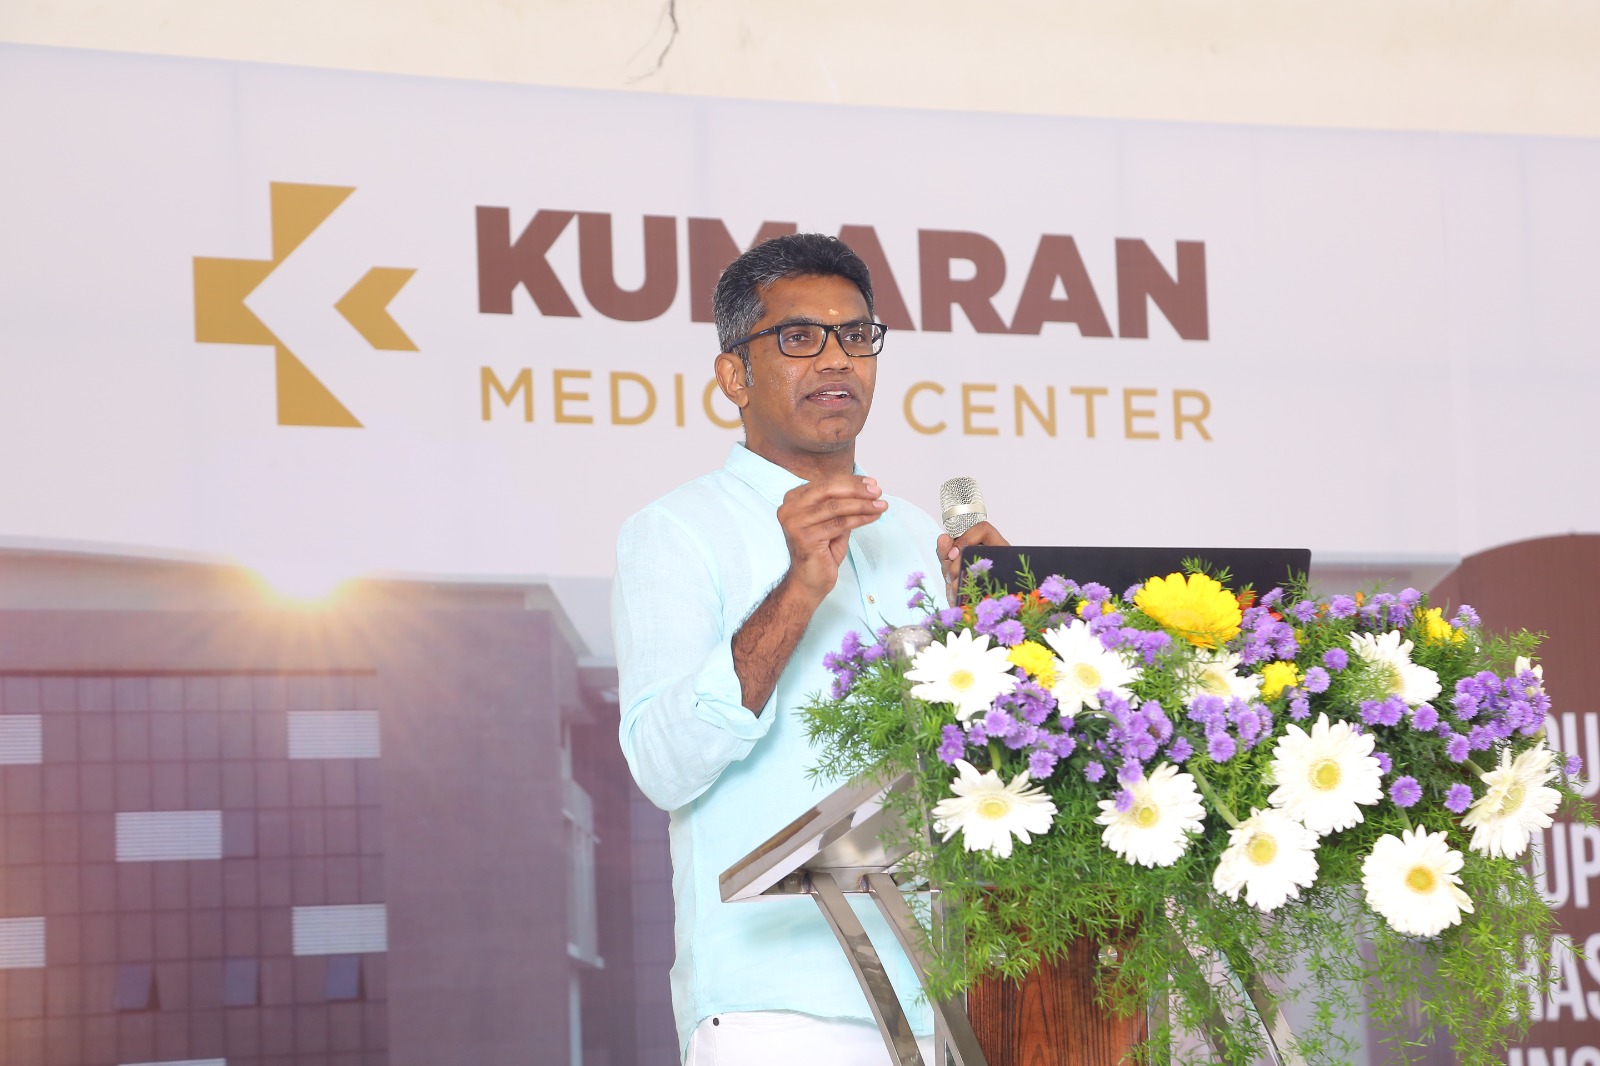 anniversary celebration at kumaran medical center